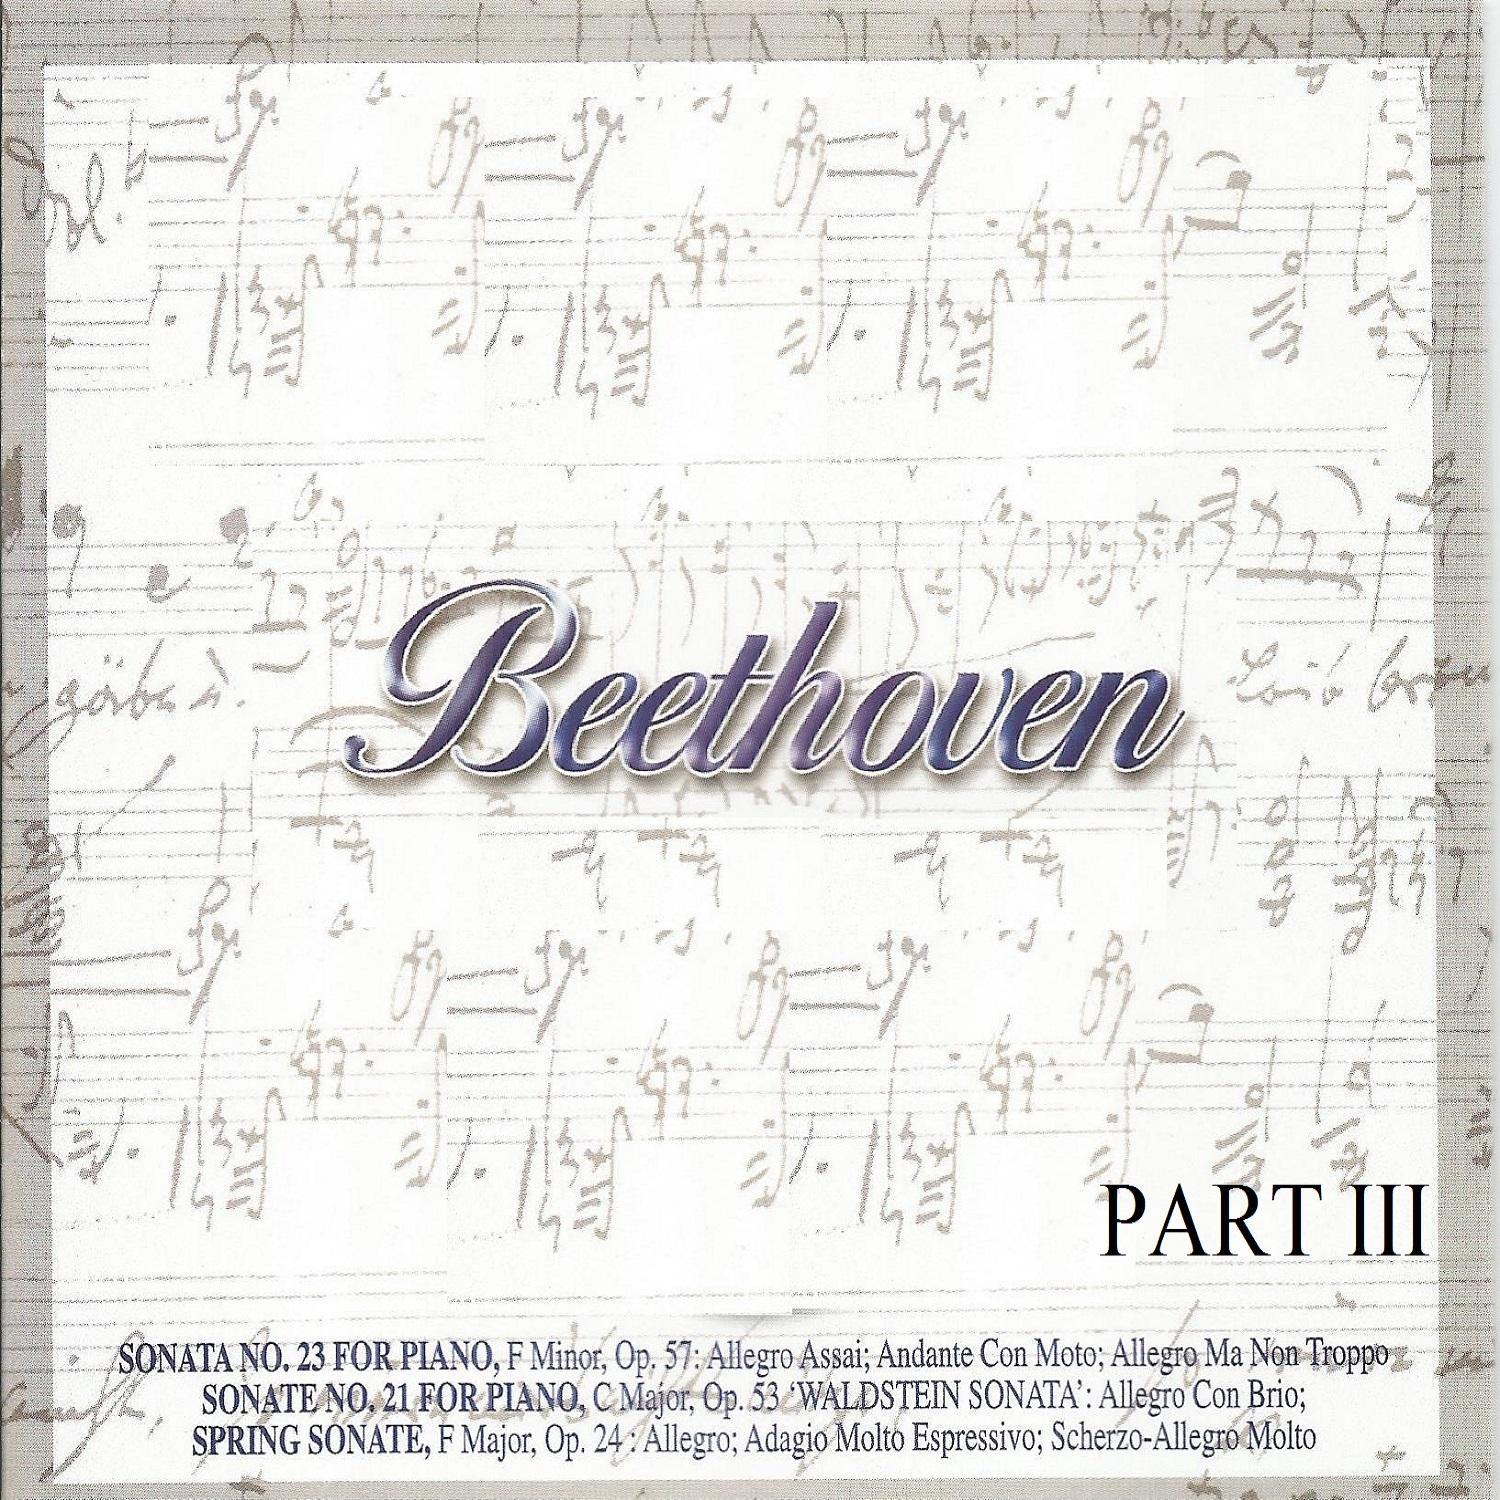 Beethoven - Part Ill专辑